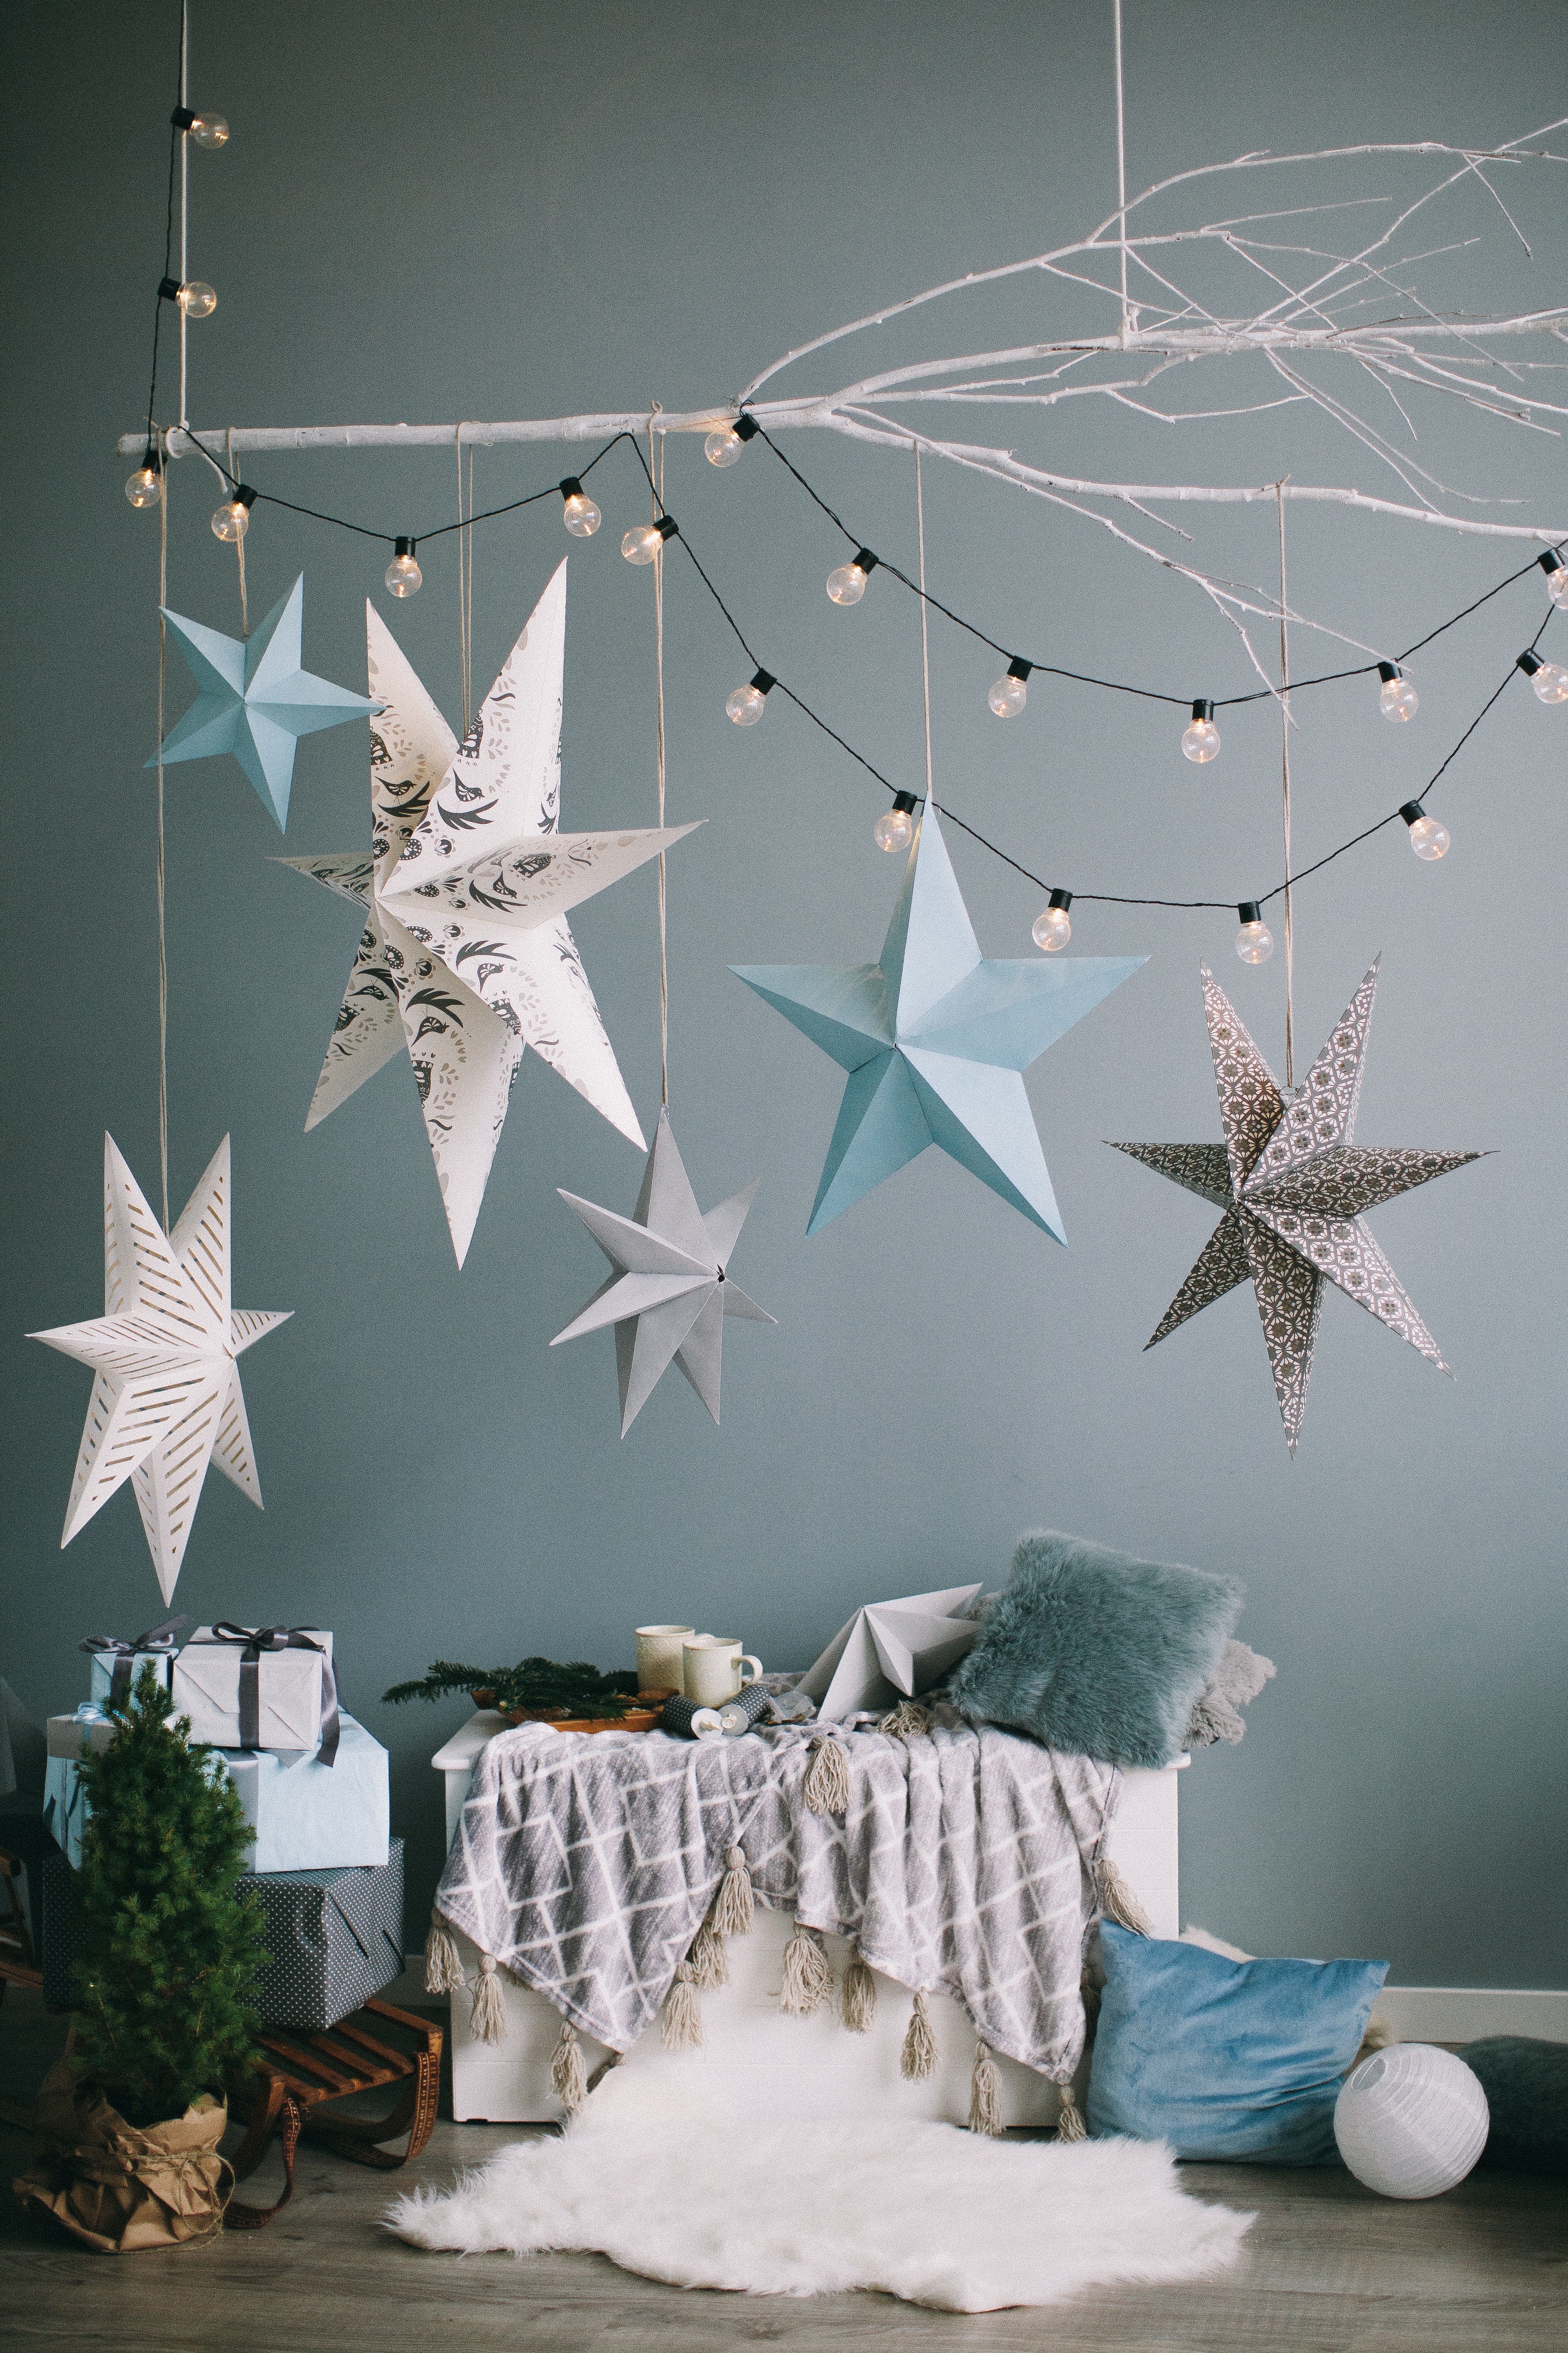 Blue, white, and gray Christmas decor